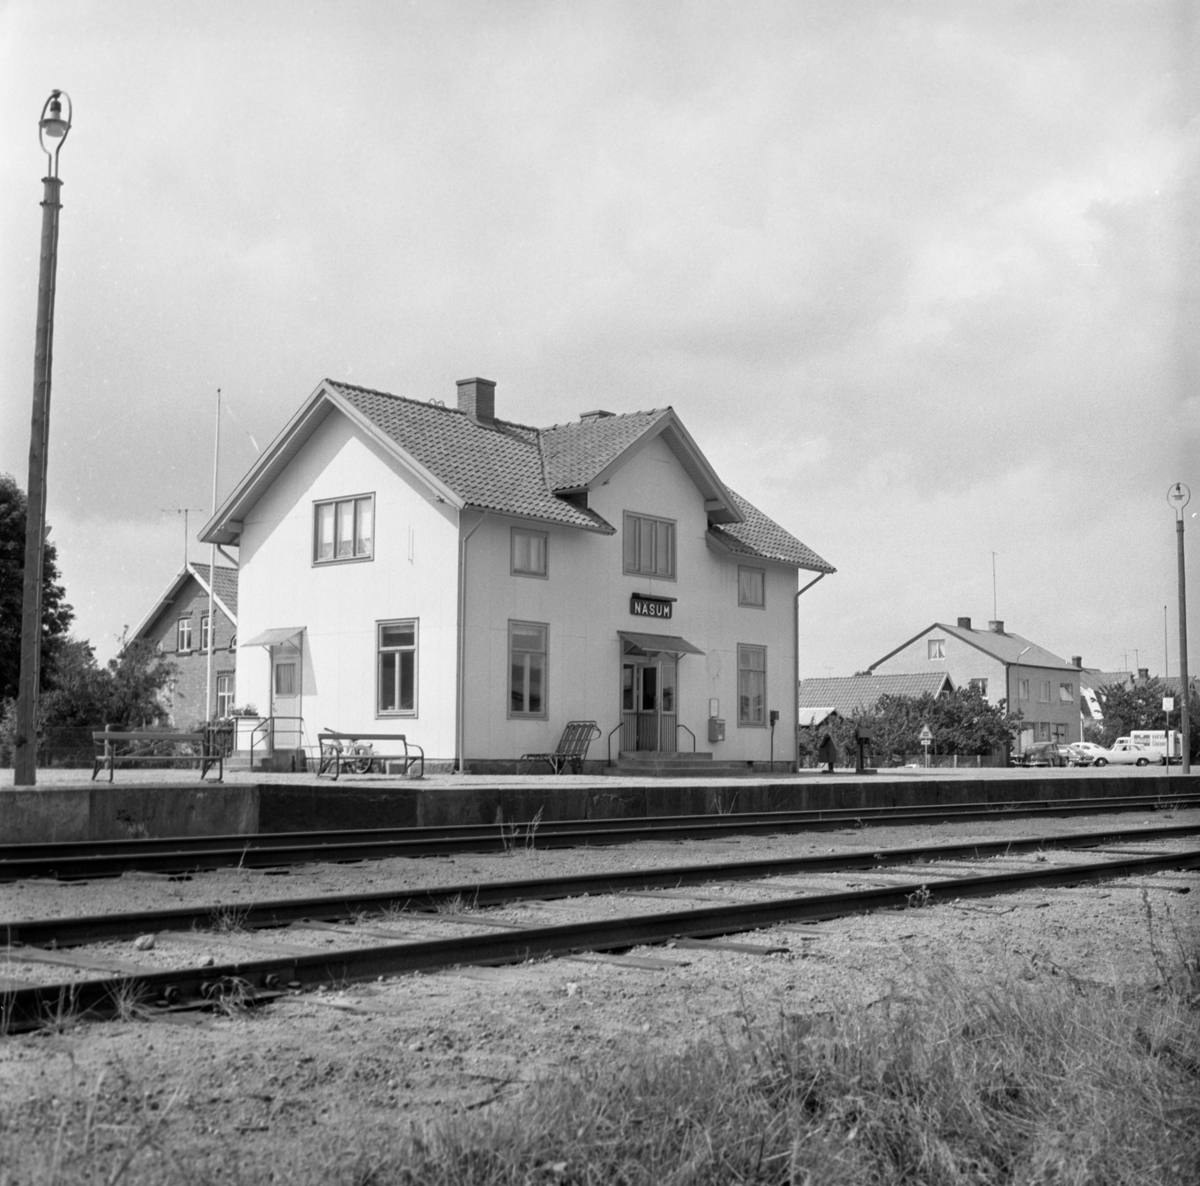 Näsum station